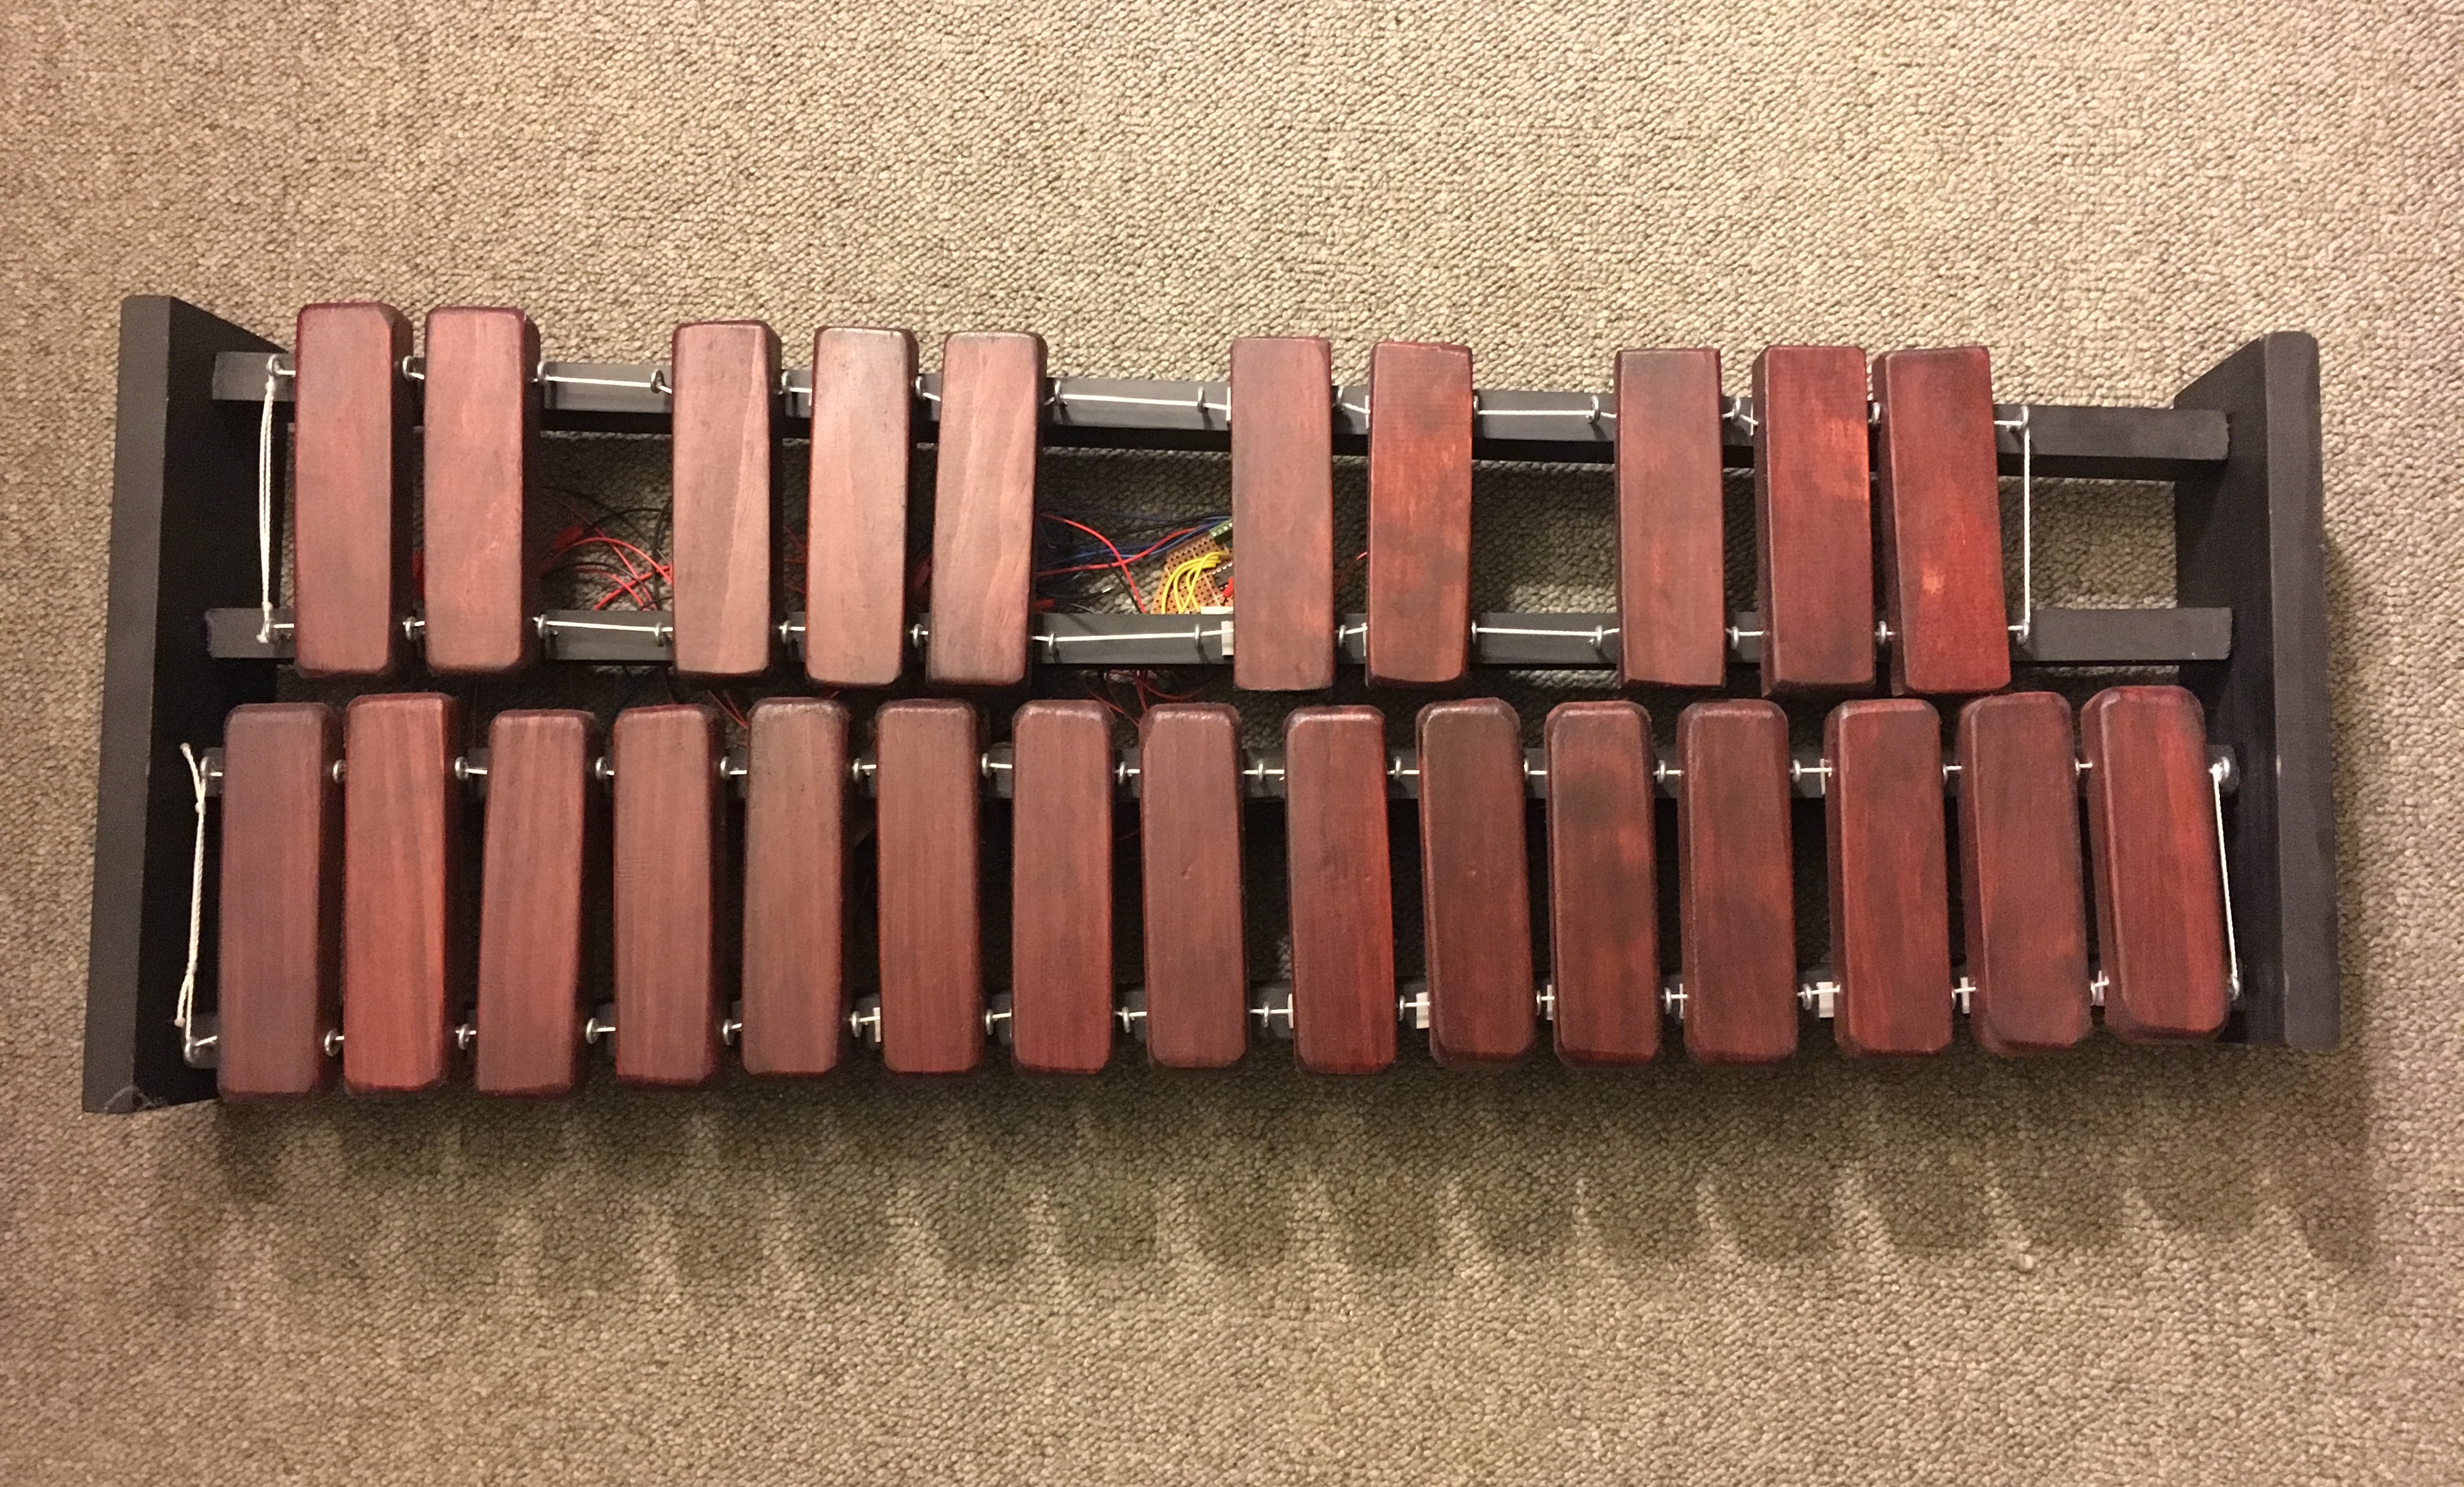 The marimba frame that I built